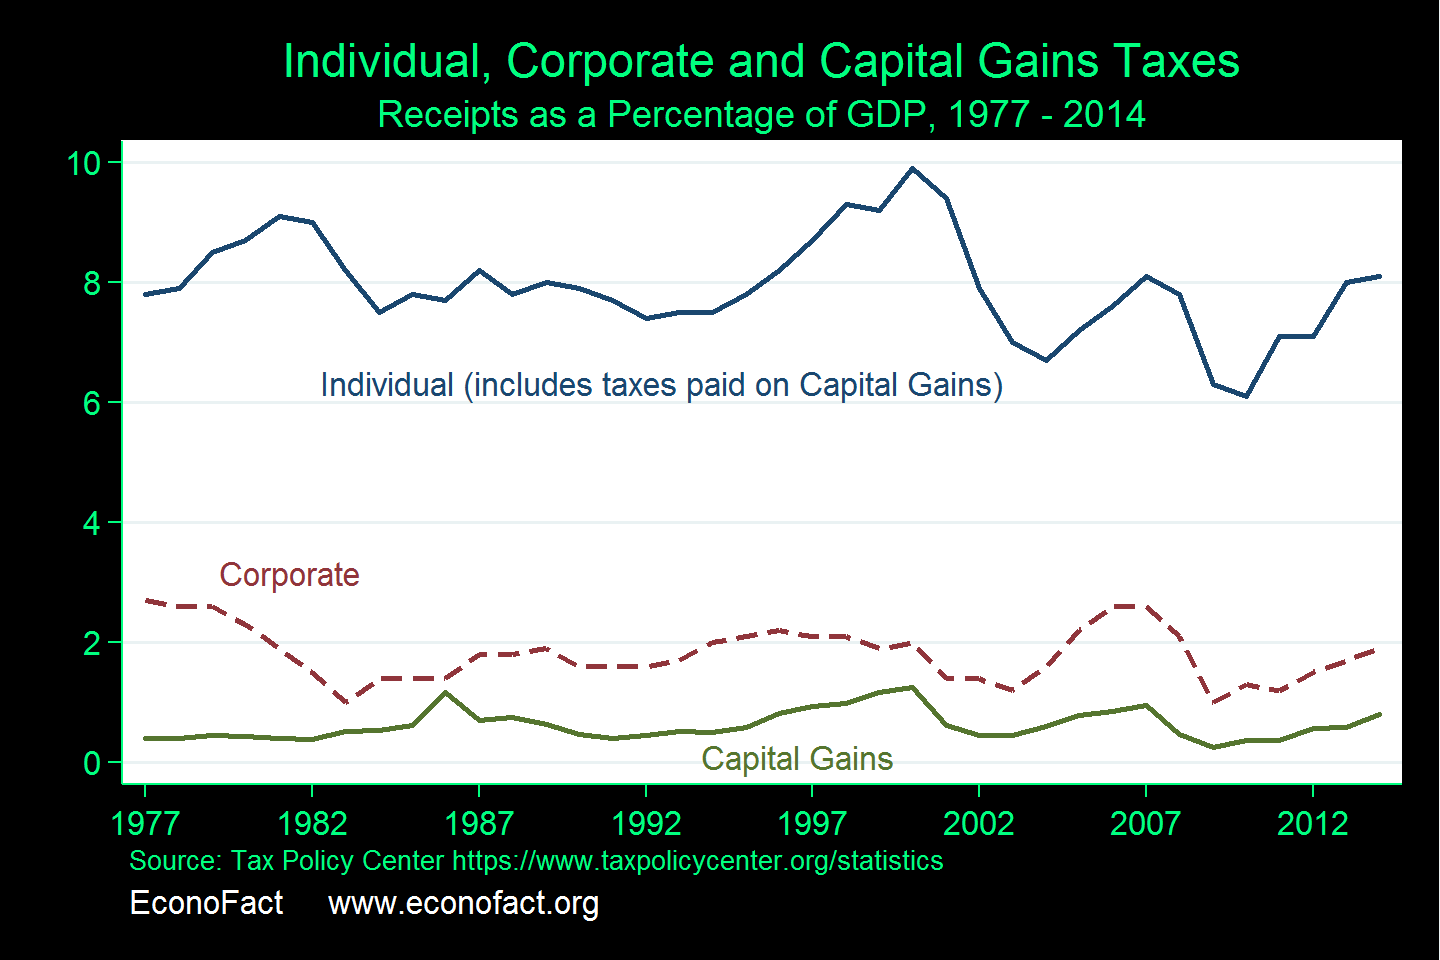 Capital Gains Tax Rate Chart